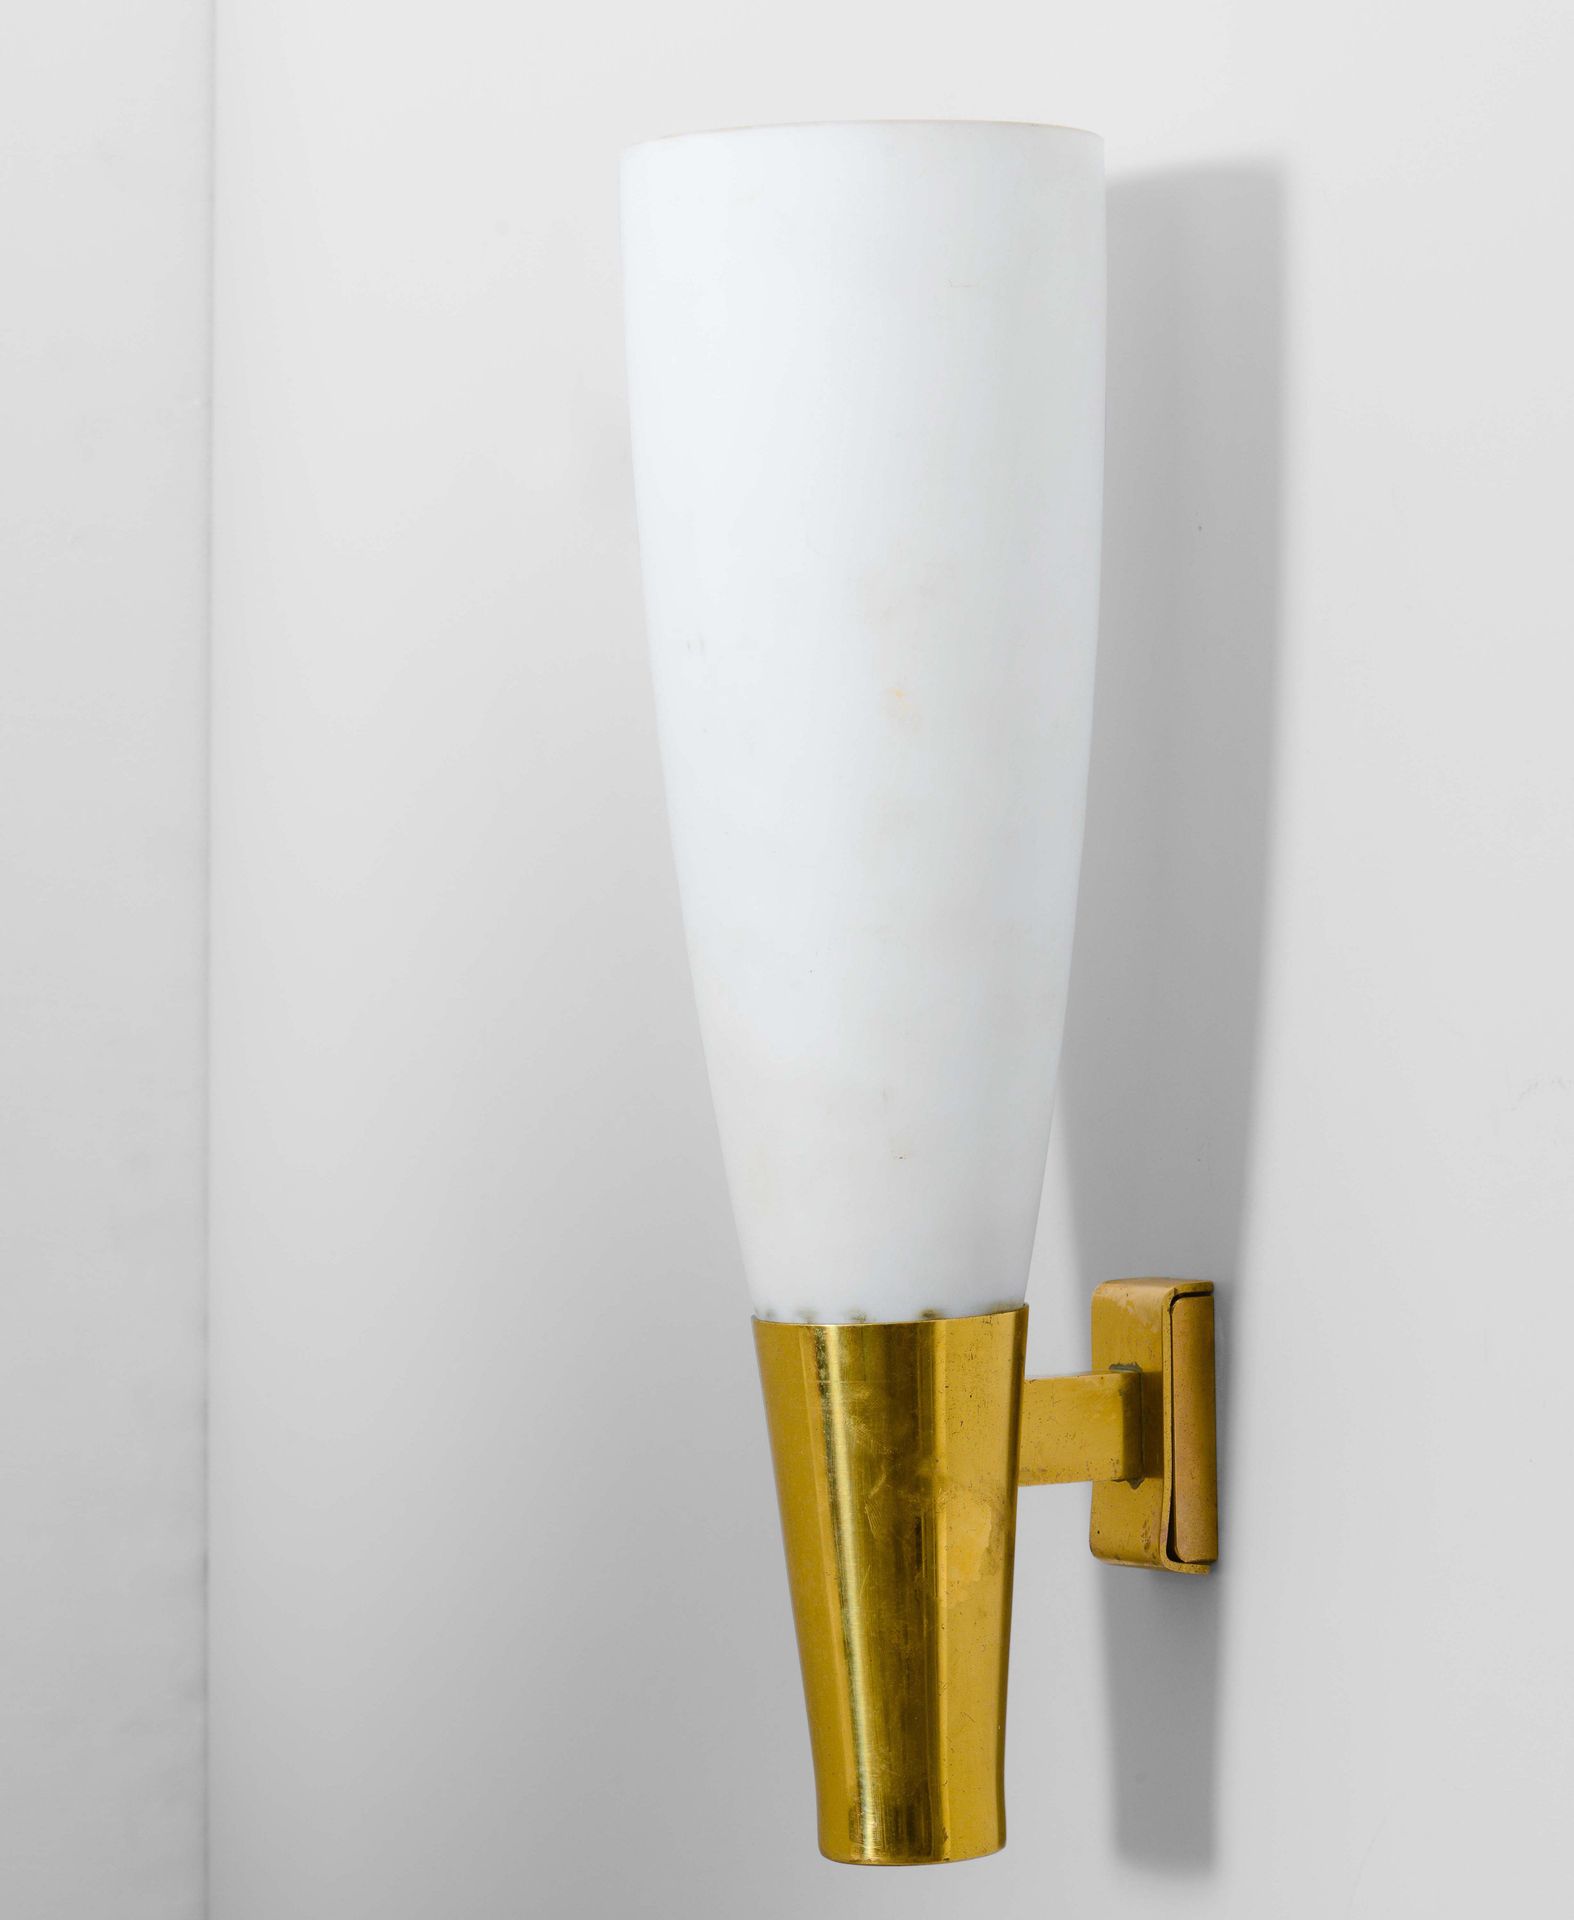 Pietro Chiesa, 壁灯，黄铜框架，缎面乳白色玻璃扩散器。意大利Fontana Arte公司制造，约1940年，尺寸13x17x47.5